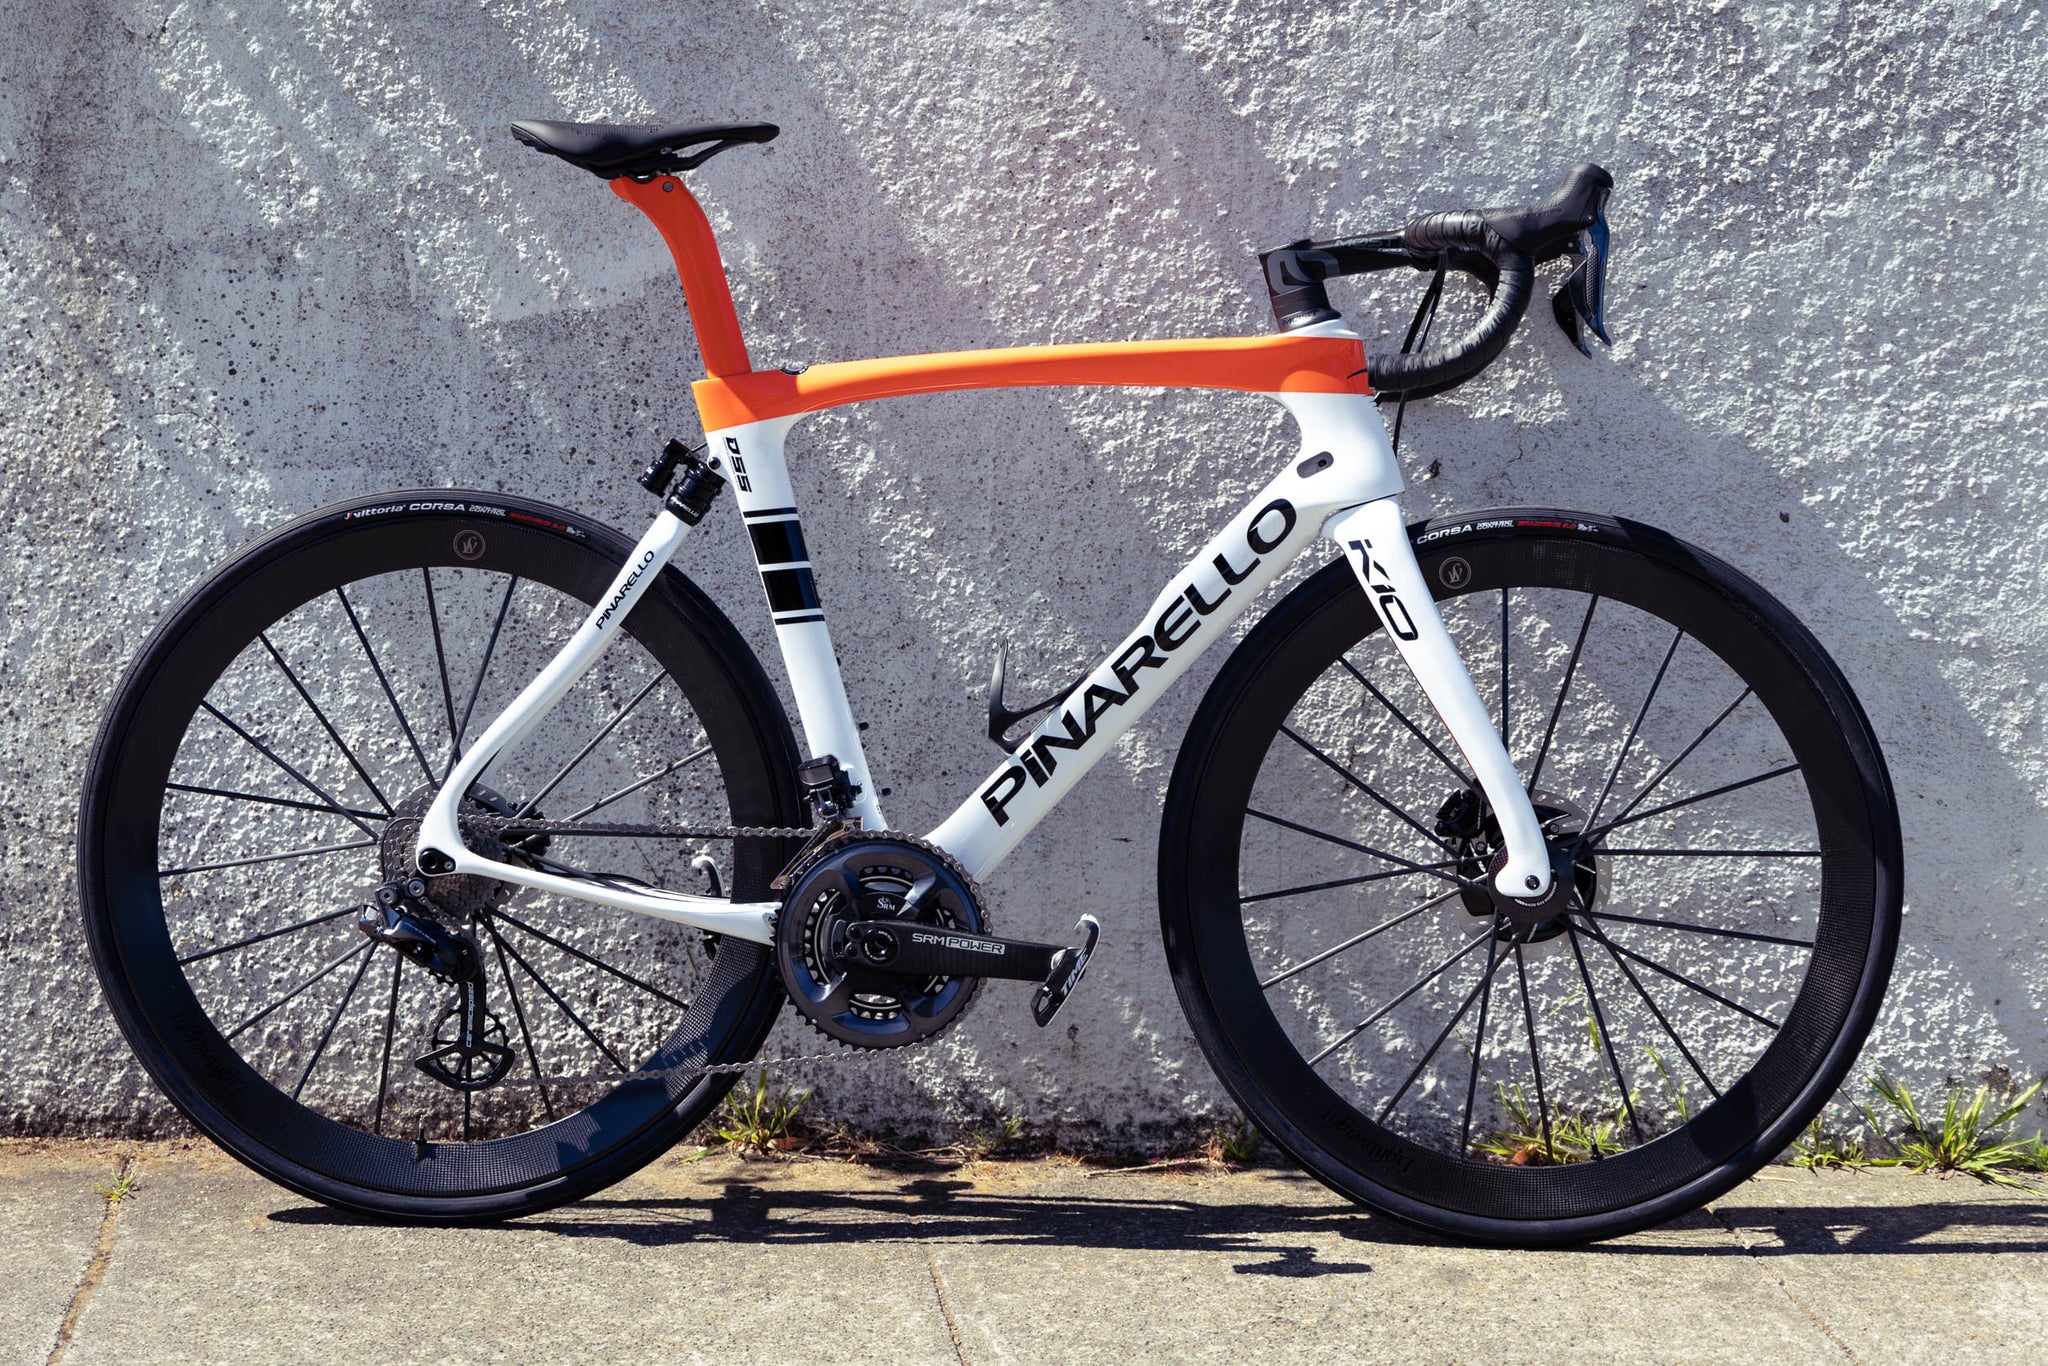 Bike of the Week: An Orange and White Striped Pinarello Dogma K10